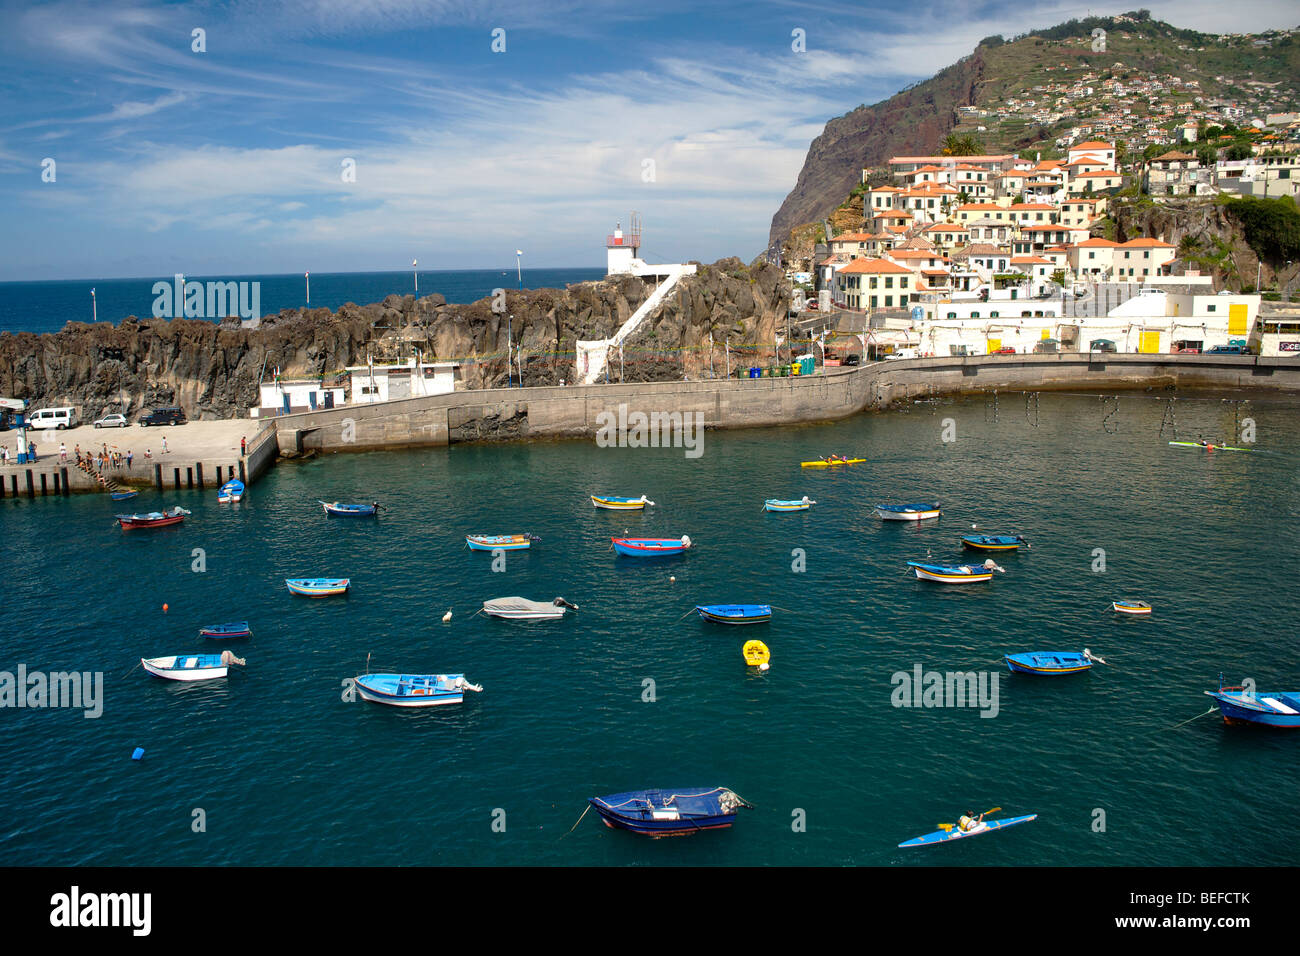 View of Camara de Lobos, a village and port on the island of Madeira. Stock Photo